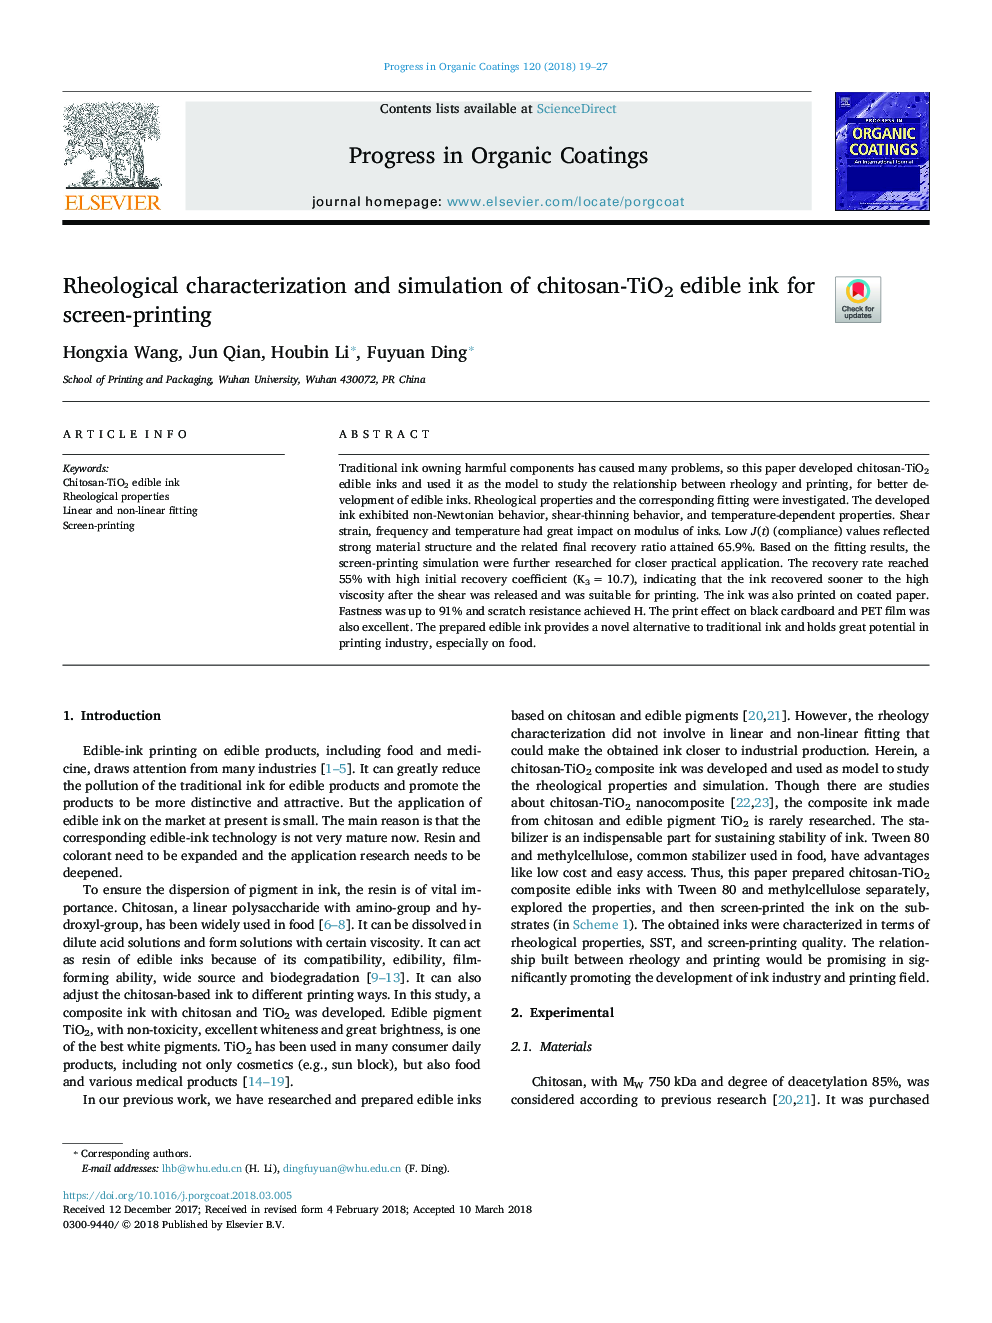 Rheological characterization and simulation of chitosan-TiO2 edible ink for screen-printing